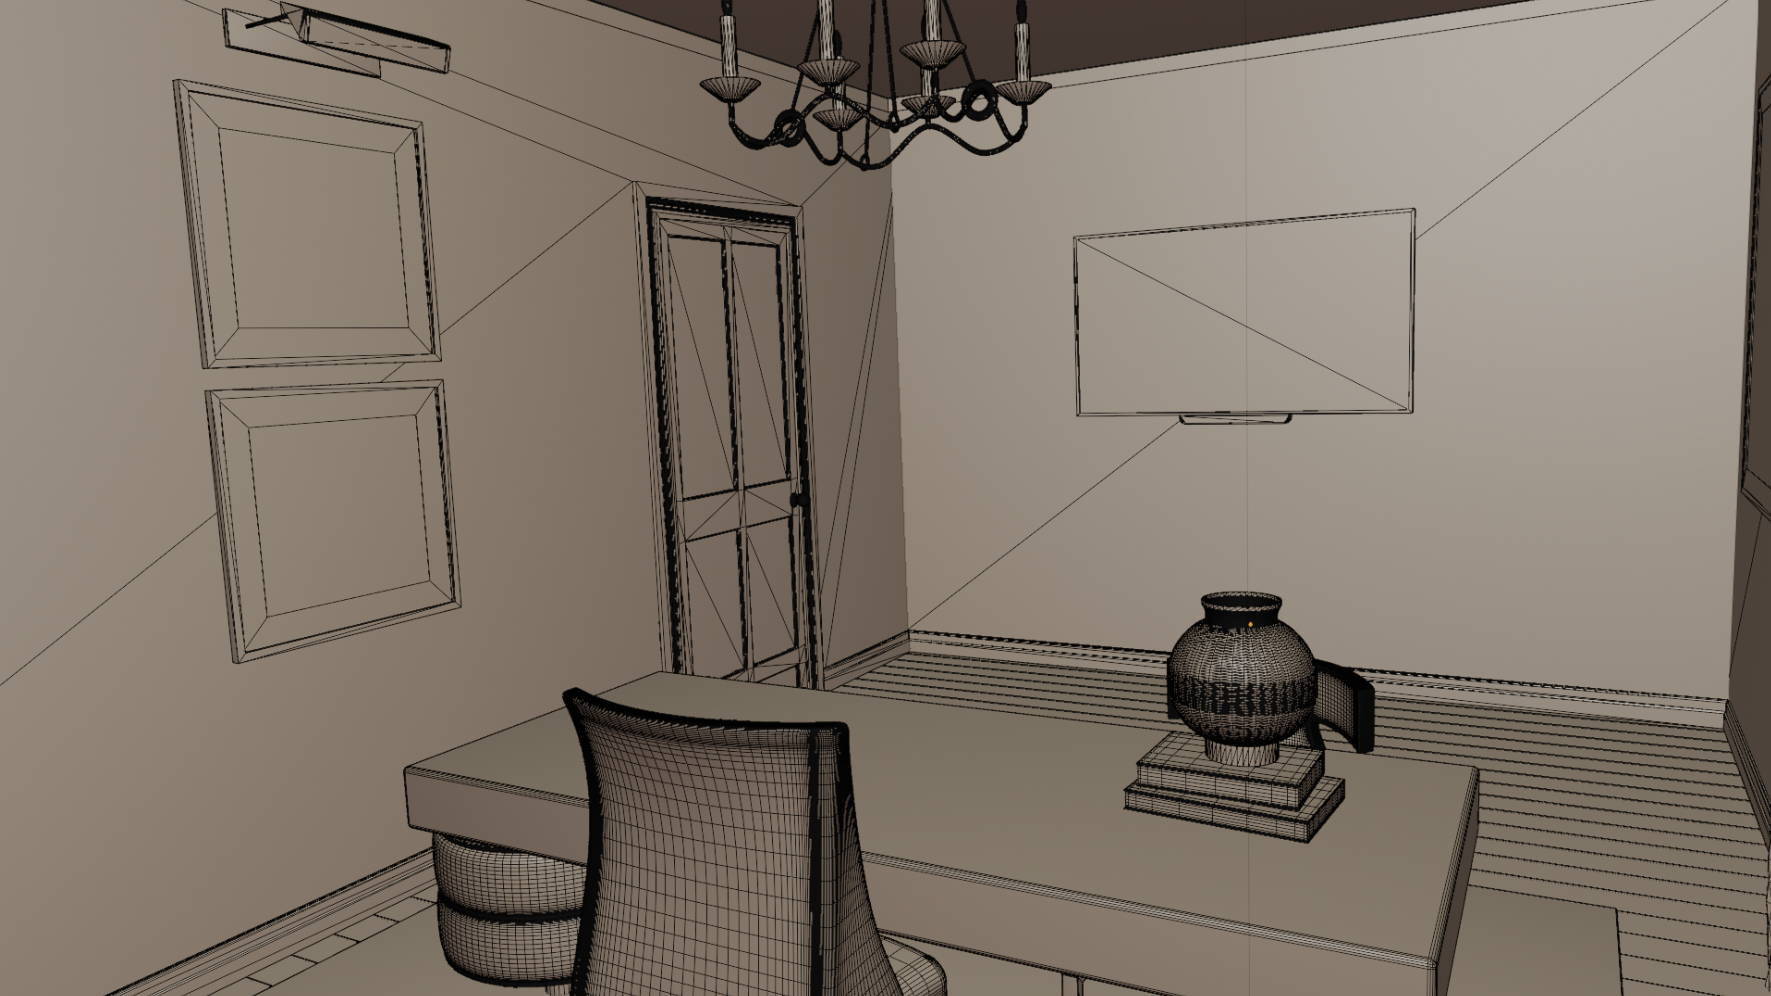 Elegant Home Office by: Digitallab3D, 3D Models by Daz 3D